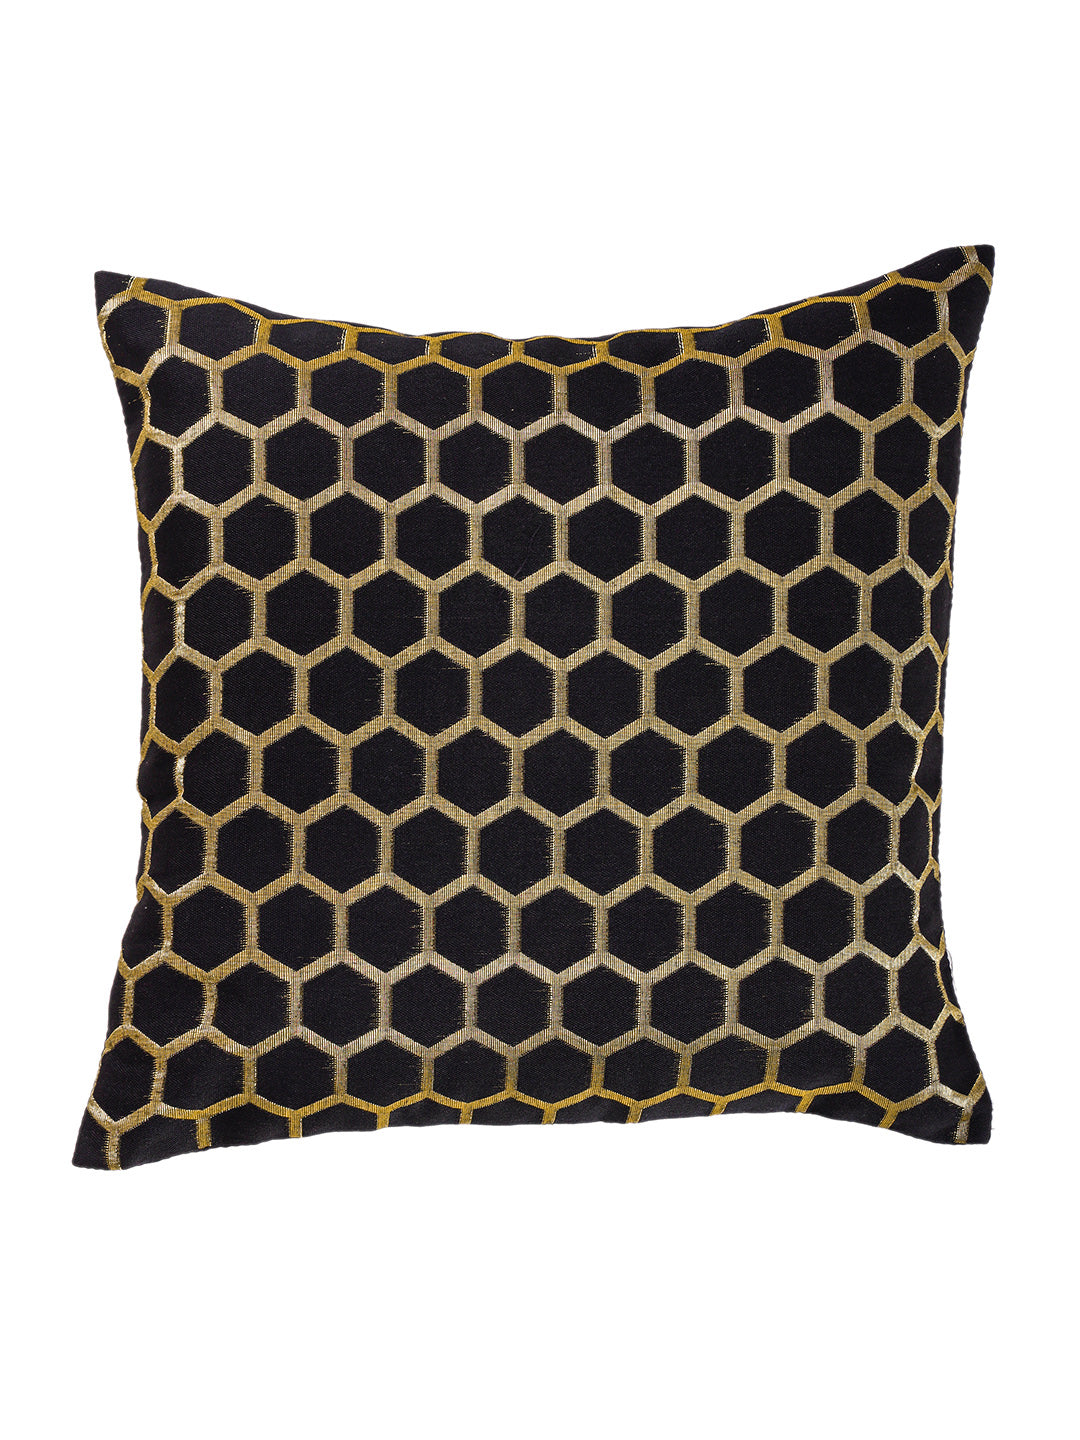 Silkfab Set 0f 5 Decorative Silk Cushion Covers (16x16) Penta Black - SILKFAB